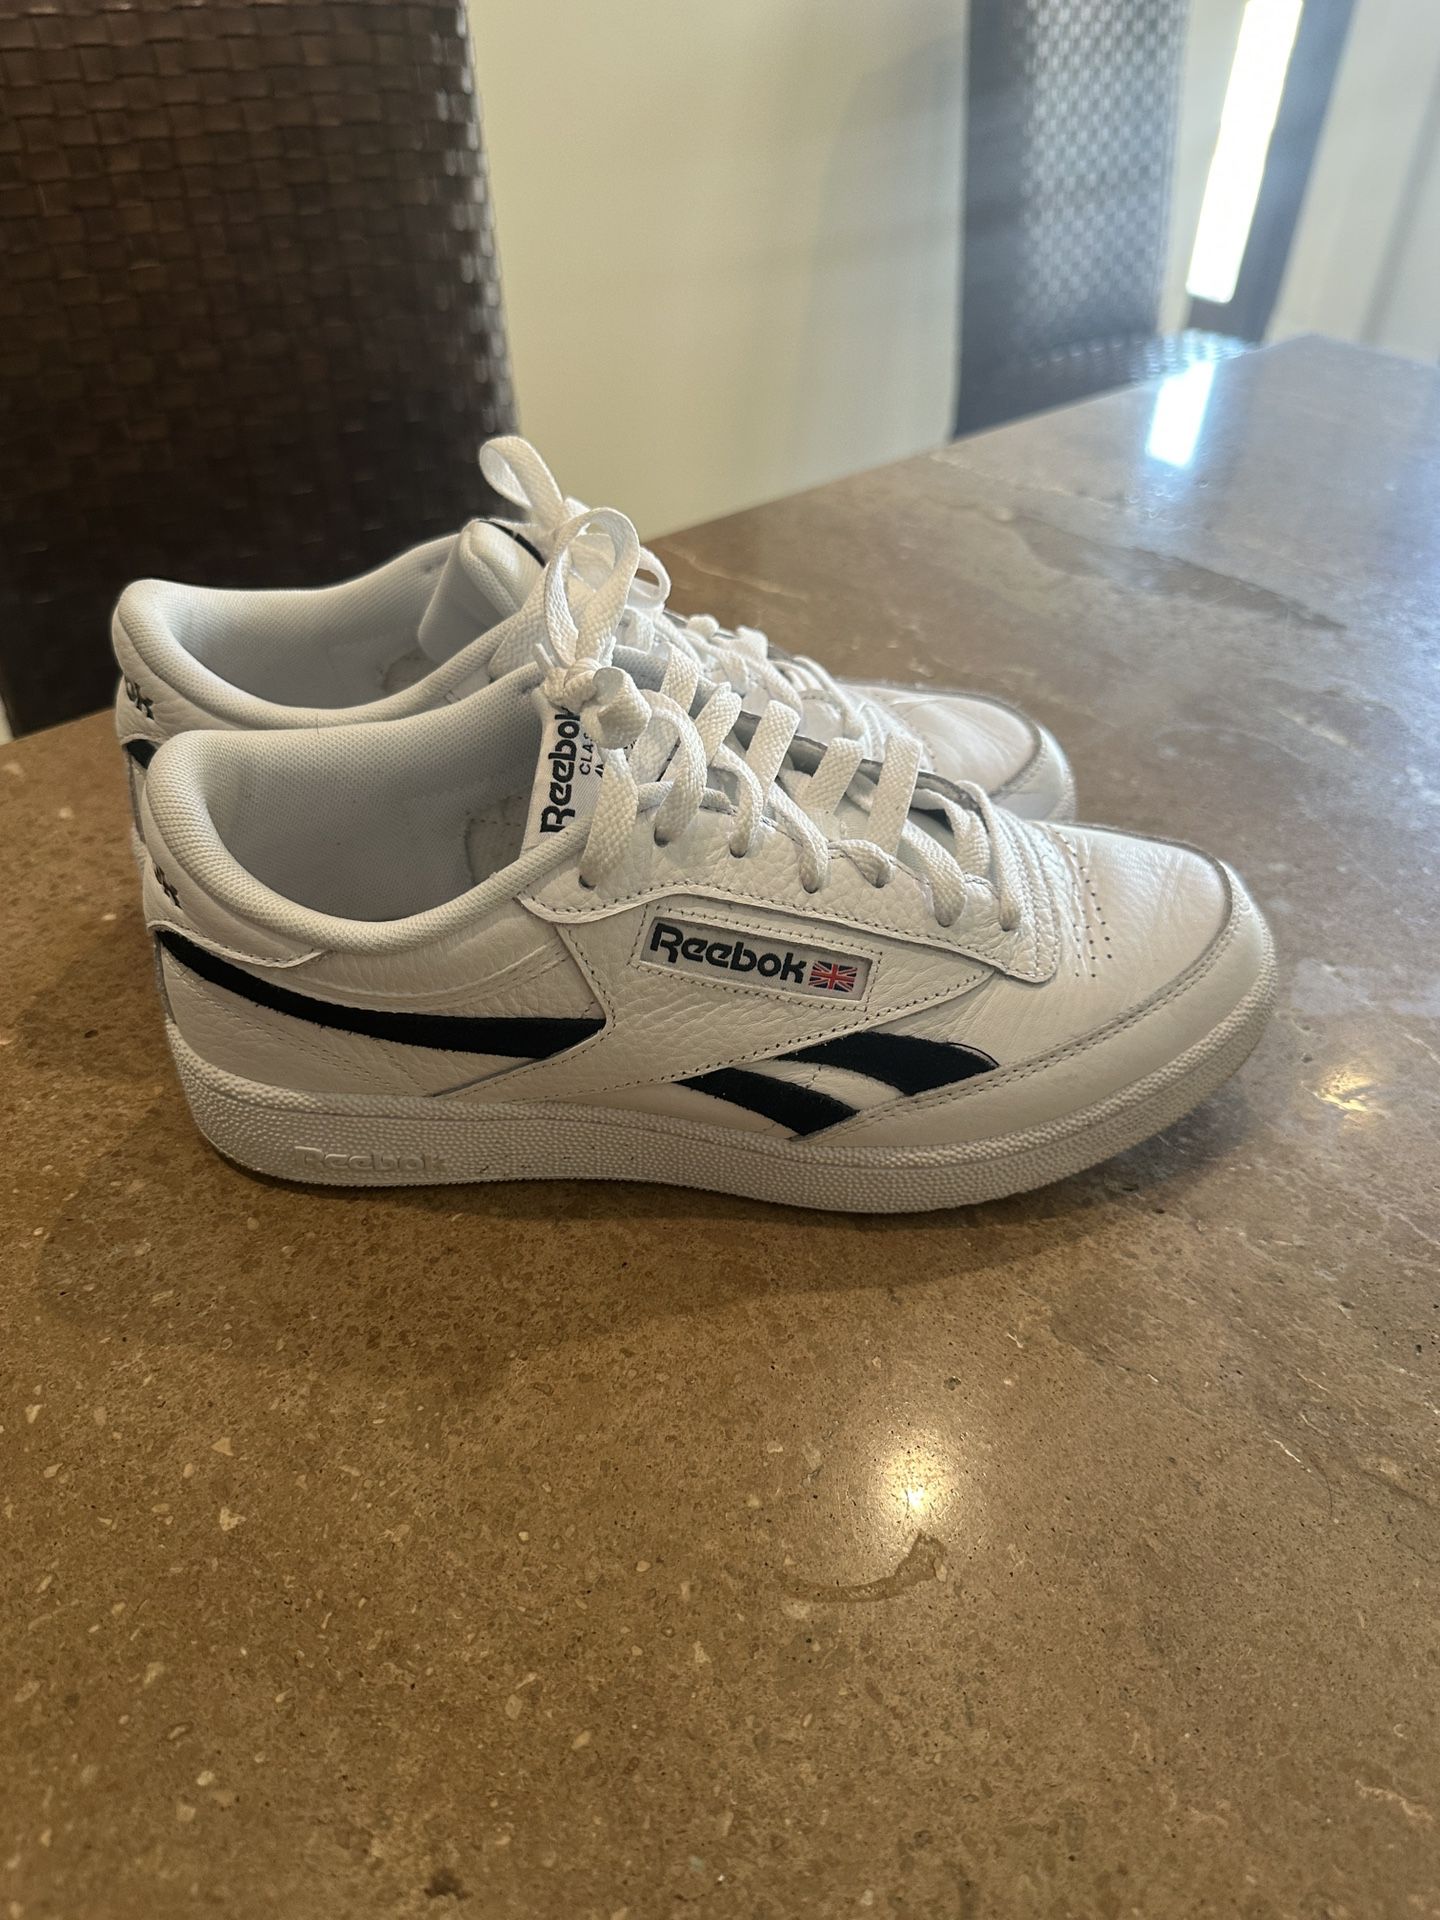 Mens Reebok Club C Revenge Shoes (size: US 9) for Sale San Diego, CA - OfferUp